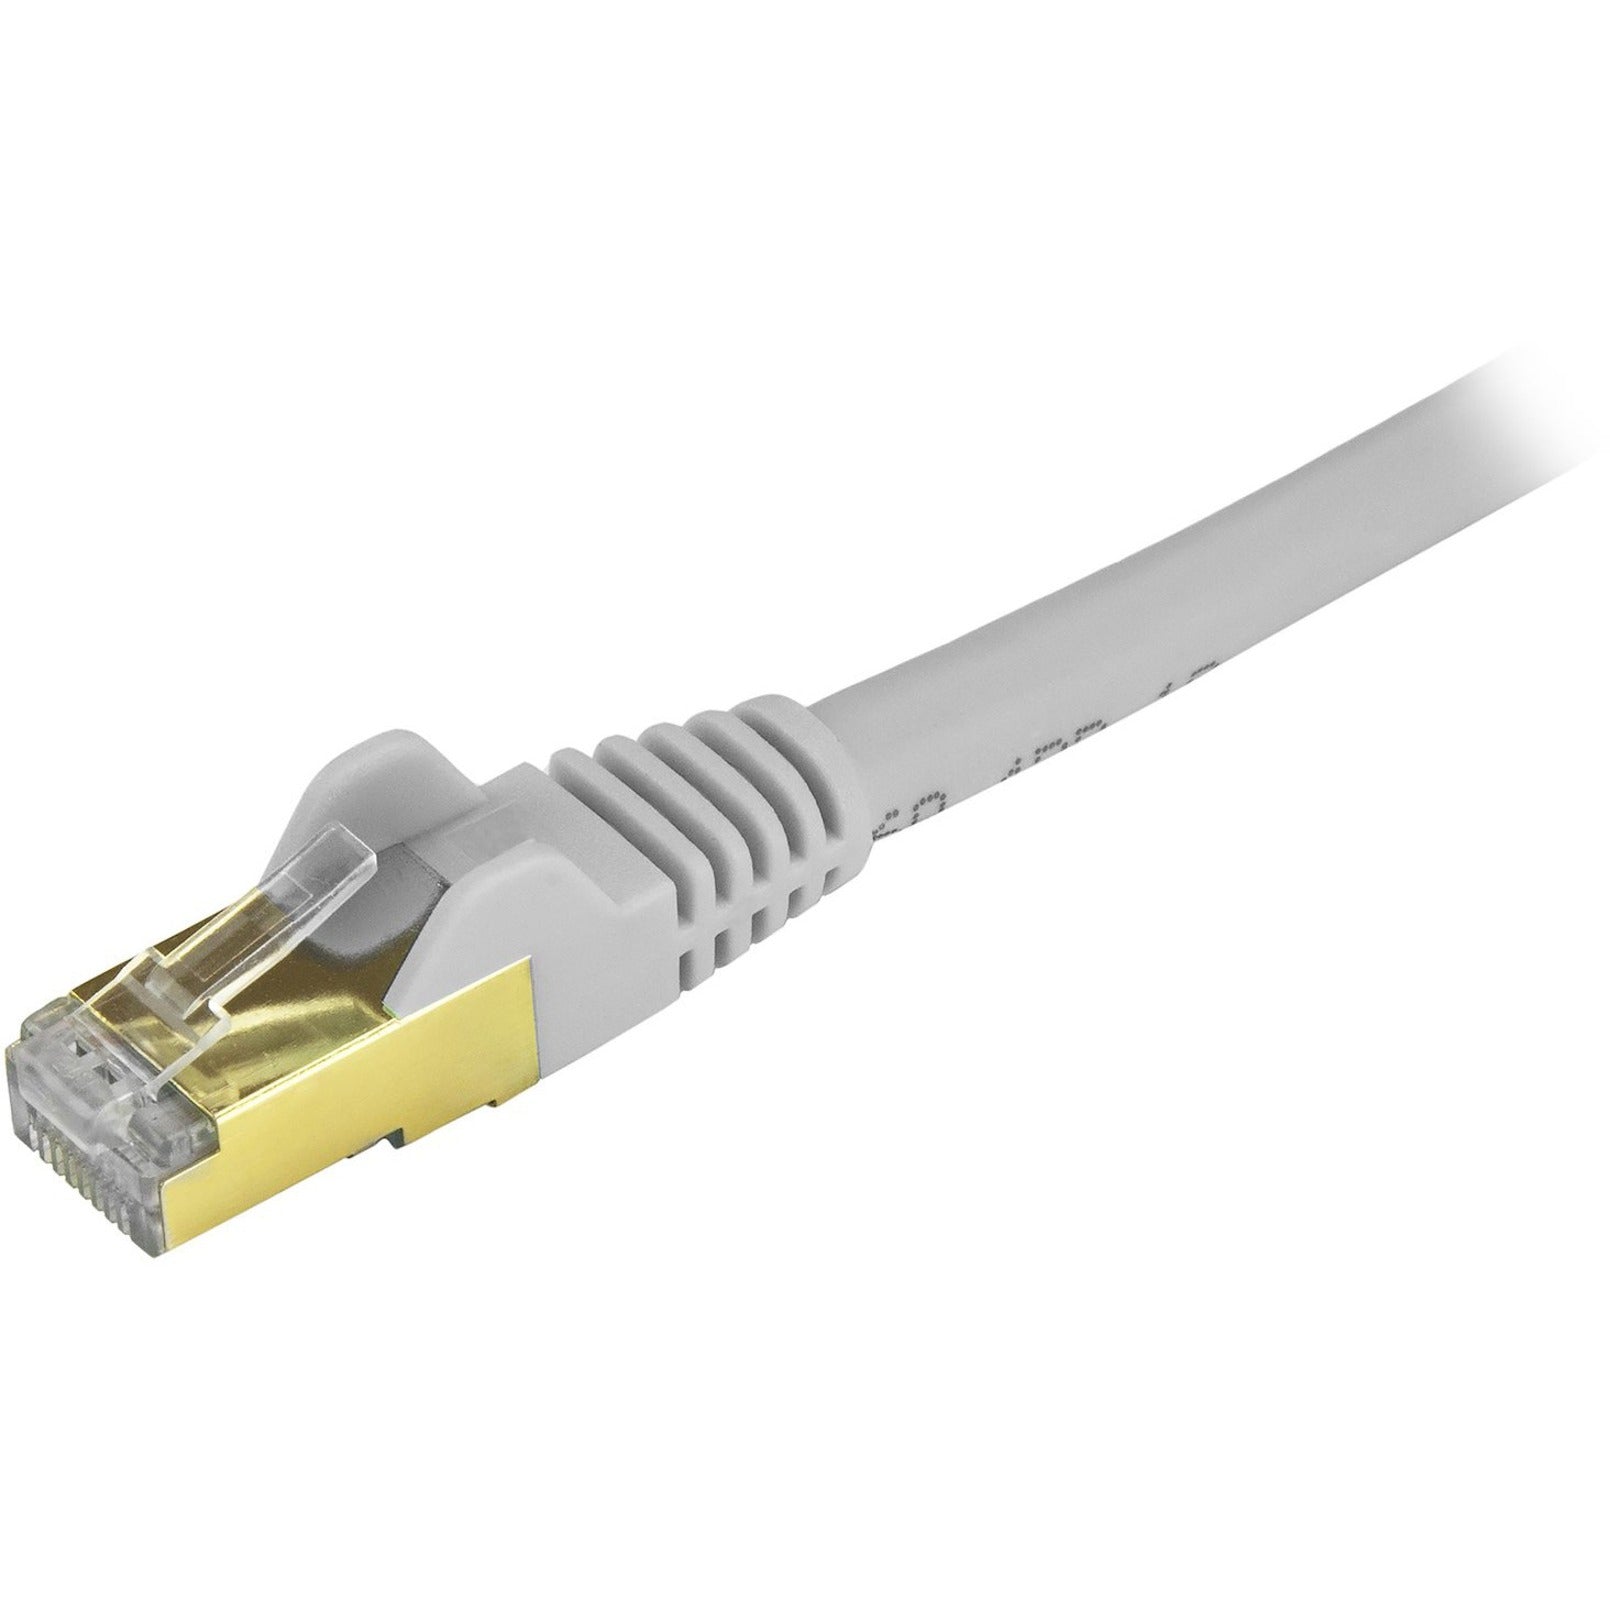 StarTech.com -> スタートテック・ドットコム C6ASPAT8GR -> Cat6a Ethernet Patch Cable -> イーサネットパッチケーブル Shielded (STP) -> シールド済み（STP） 8 ft. -> 8 フィート Gray -> グレー Snagless RJ45 Ethernet Cord -> スナッグレスRJ45イーサネットコード